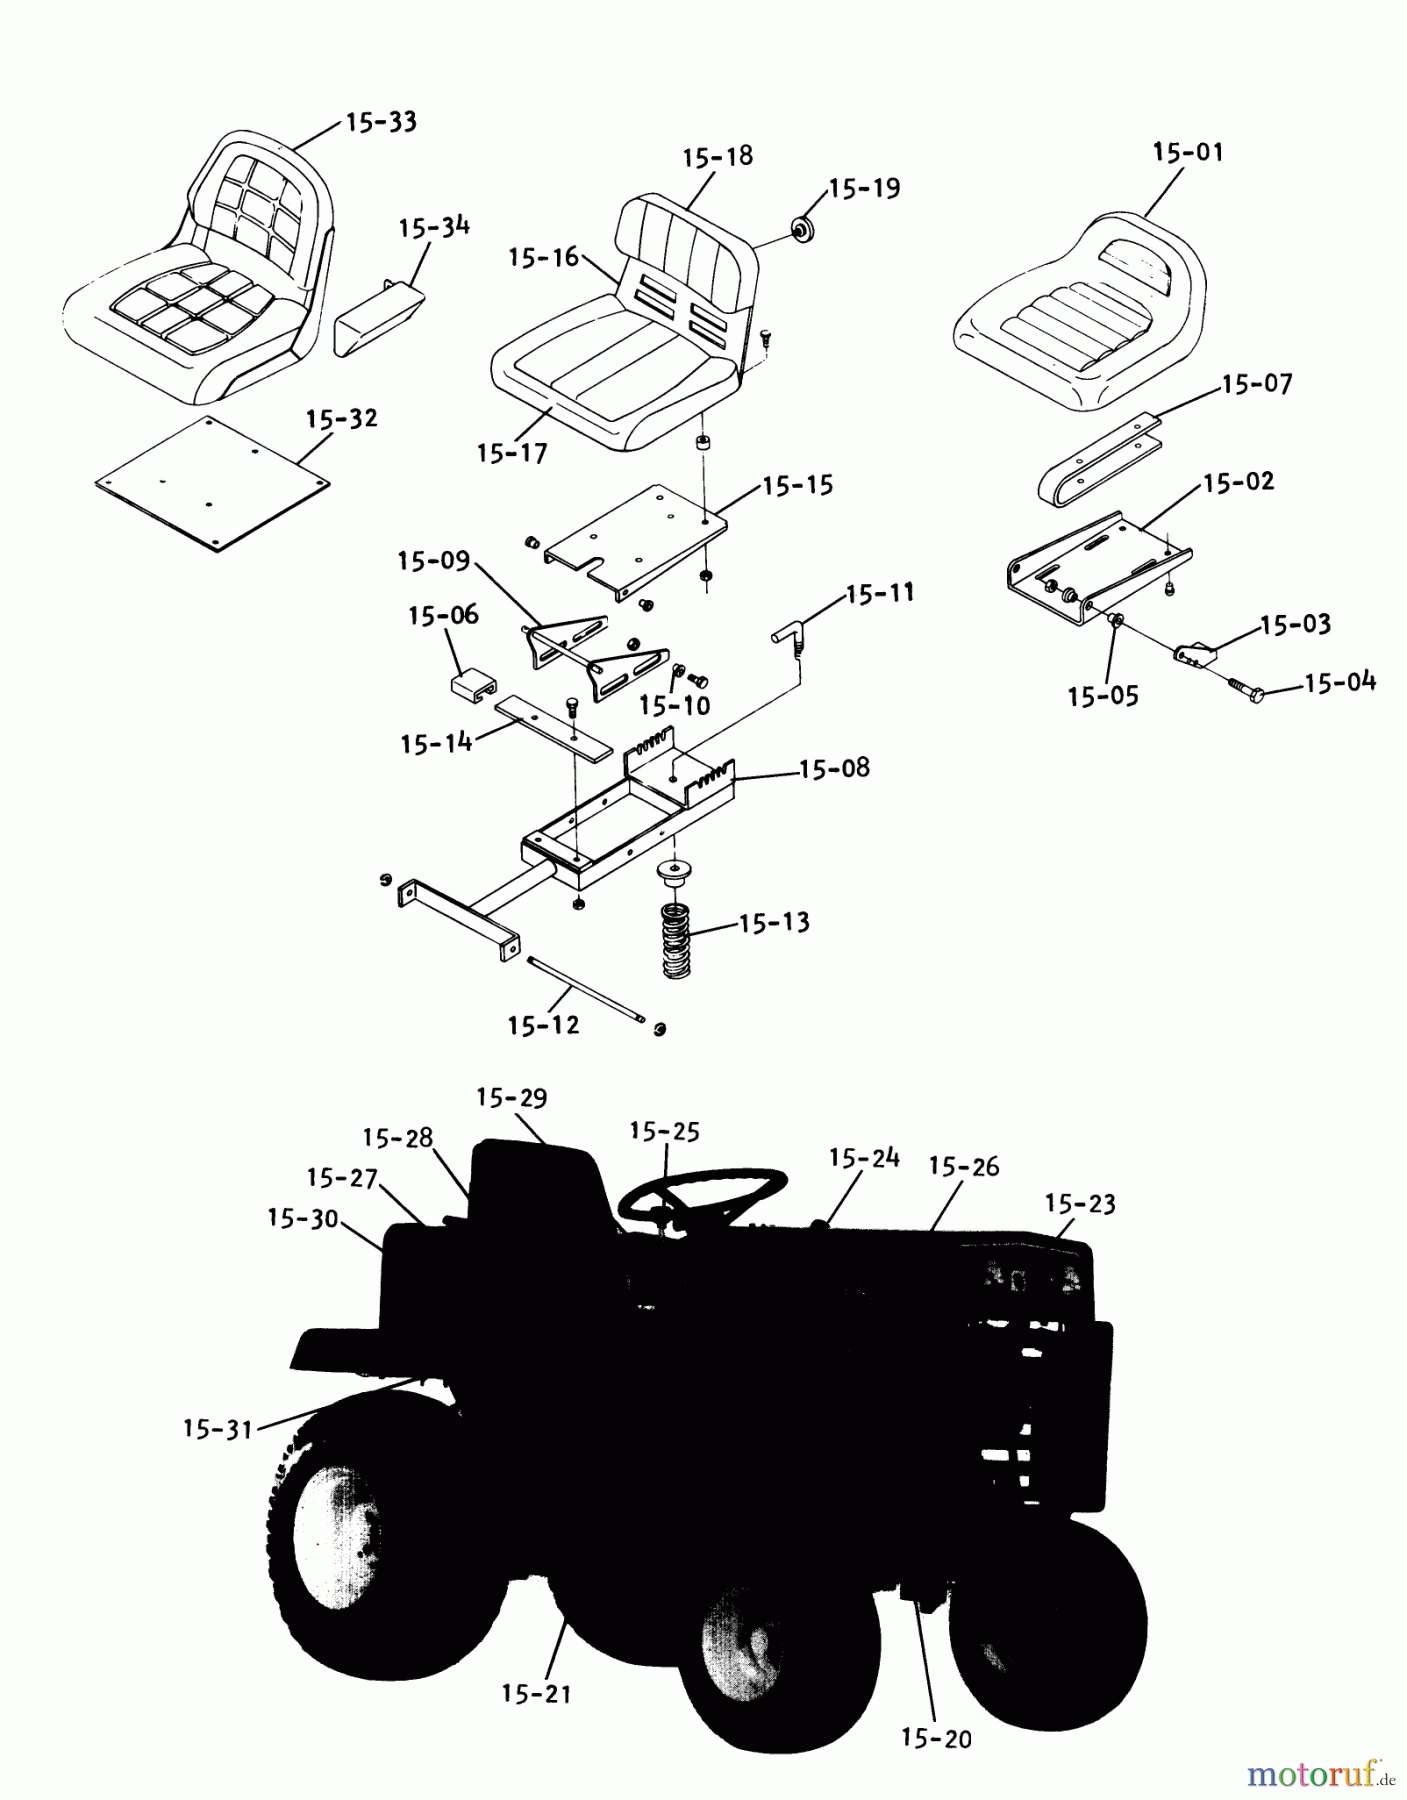  Toro Neu Mowers, Lawn & Garden Tractor Seite 1 1-0631 (D-200) - Toro D-200 Automatic Tractor, 1975 14.040 REAR POWER TAKE-OFF (FIG. 14B) #2